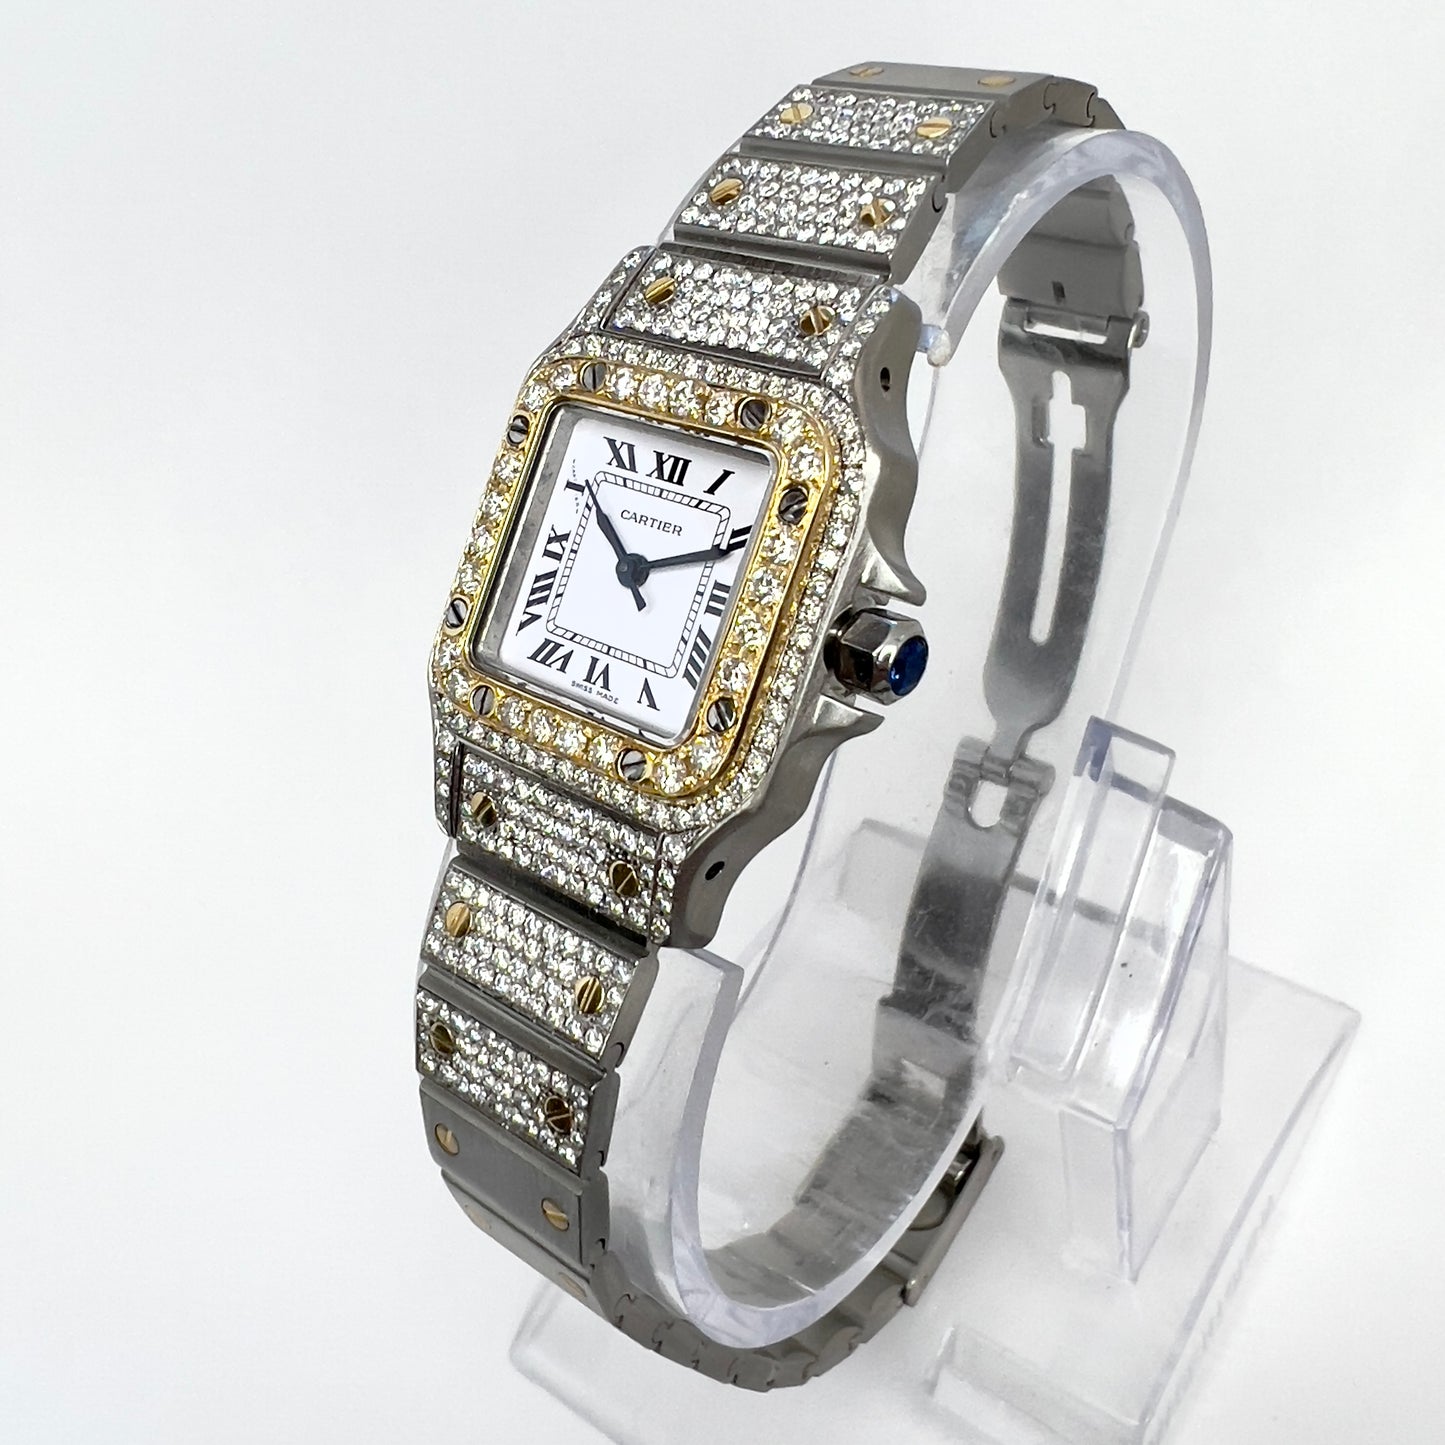 CARTIER SANTOS GALBEE 24mm Automatic 2 Tone 2.42TCW Diamond Watch